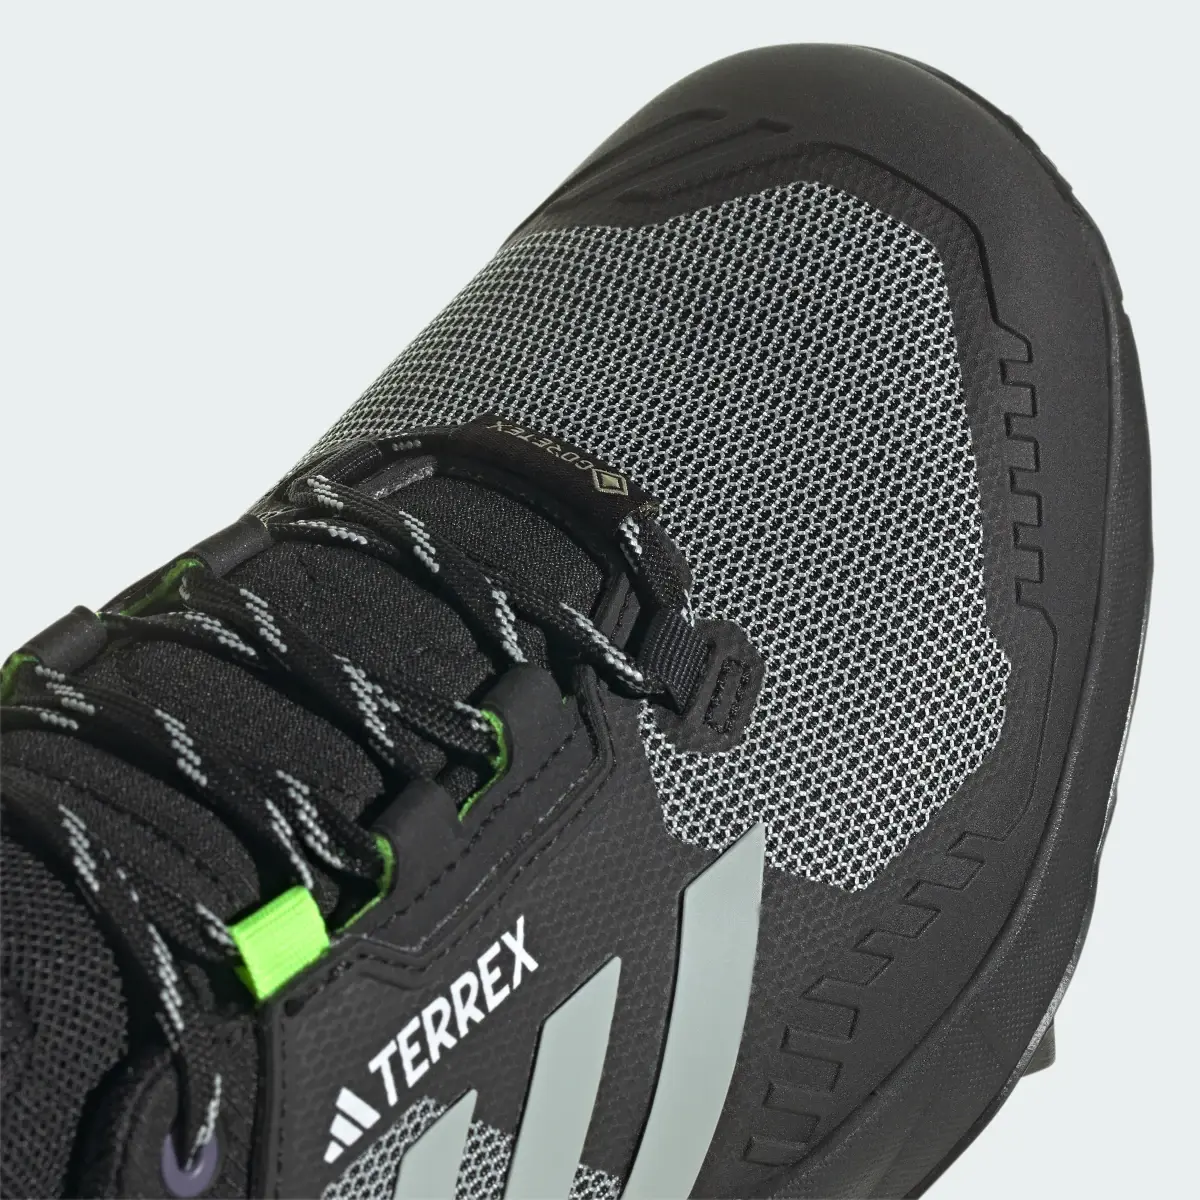 Adidas TERREX Swift R3 GORE-TEX Hiking Shoes. 3